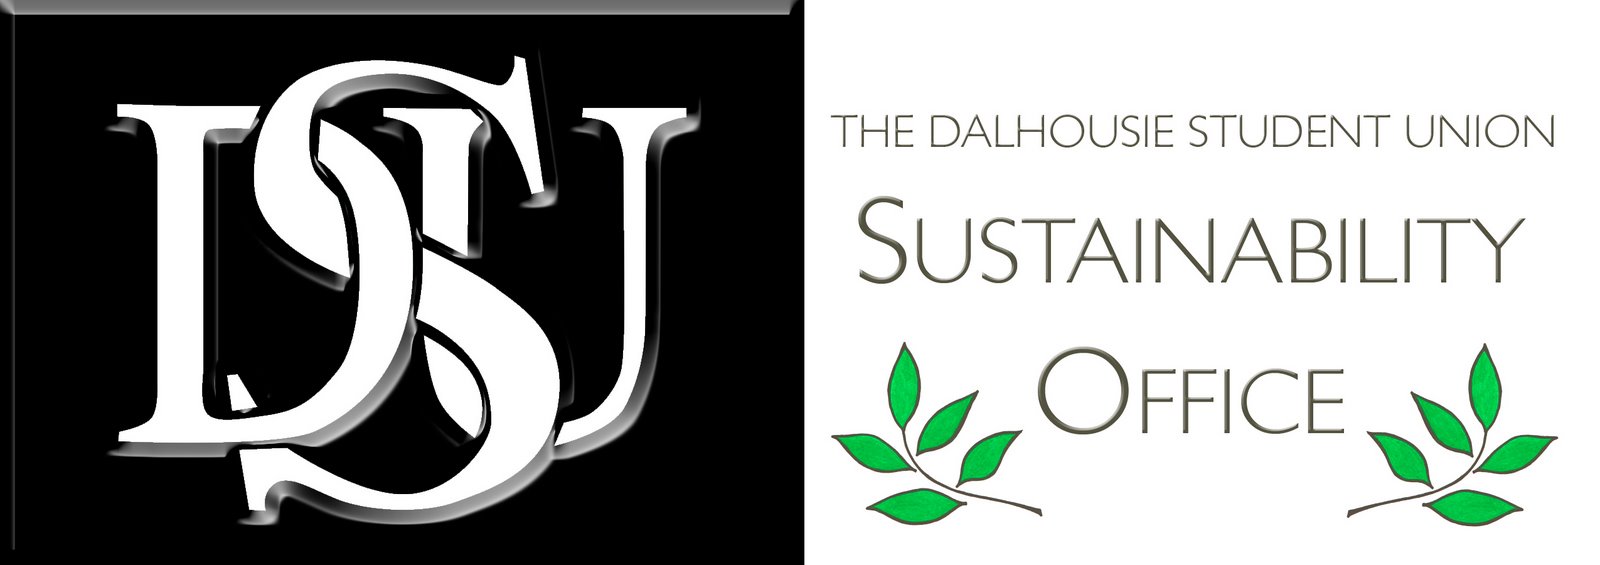 The Dalhousie Student Union Sustainability Office Blog